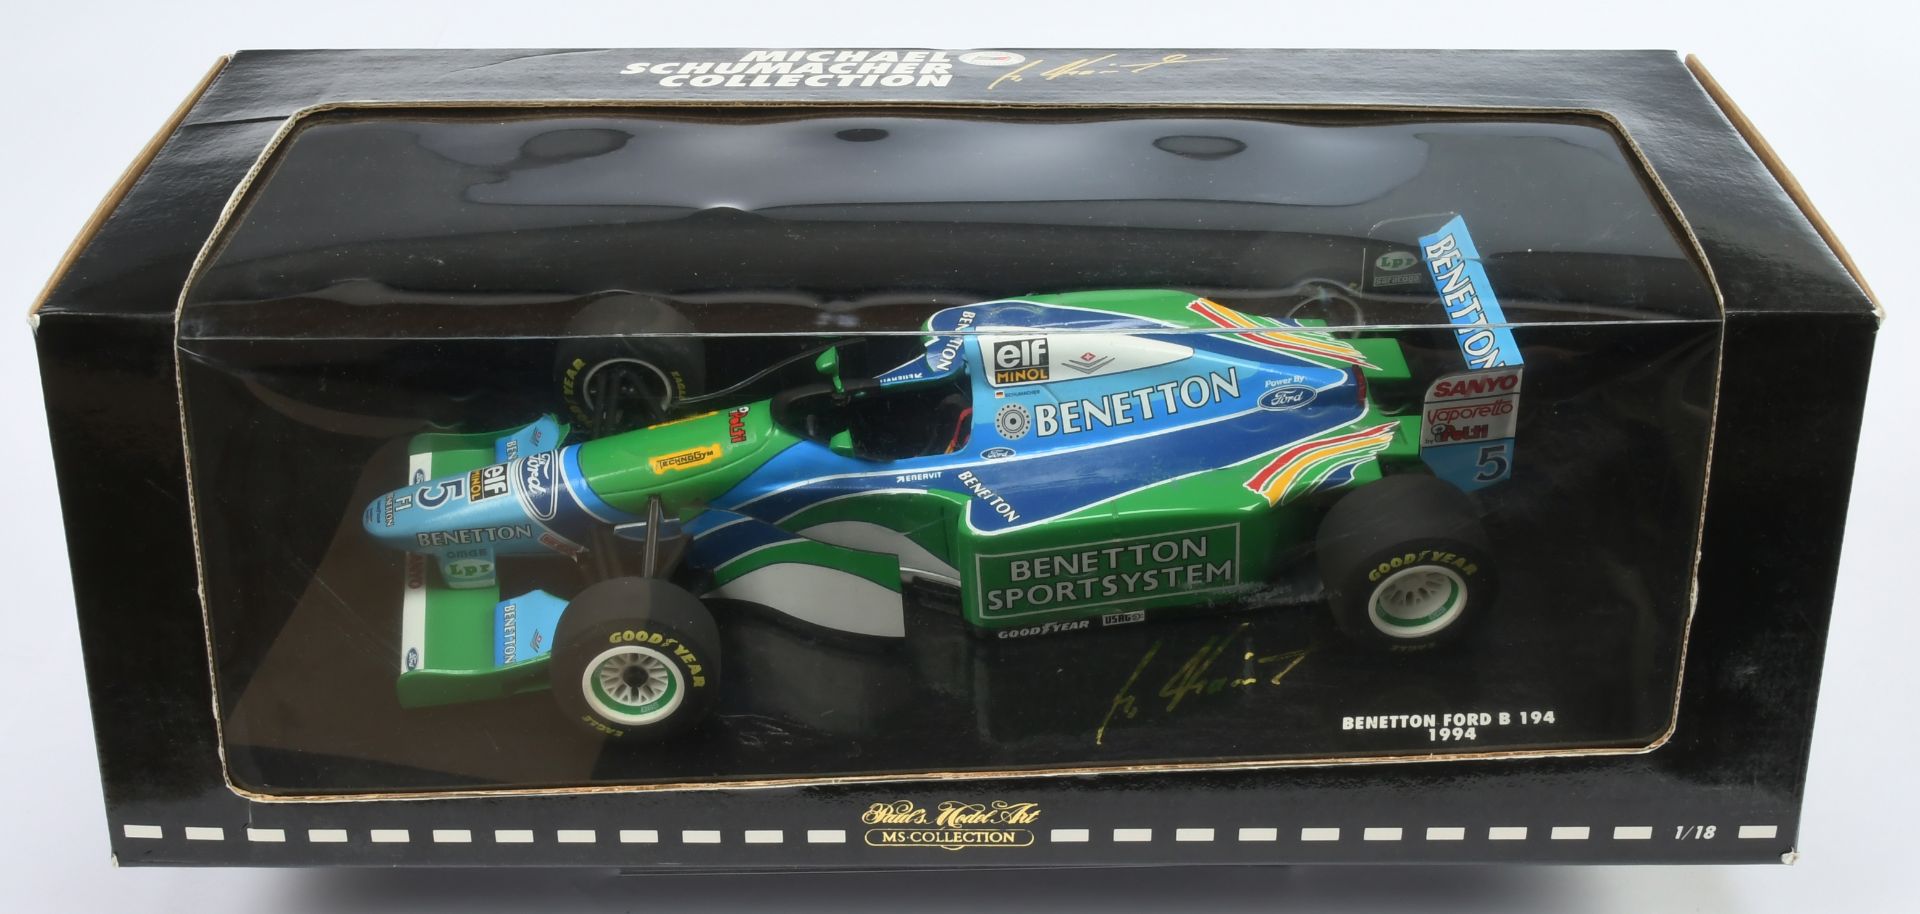 Minichamps 1/18th scale 510 941805 Benetton Ford B194 GP M. Schumacher - Near Mint to Mint in Goo...